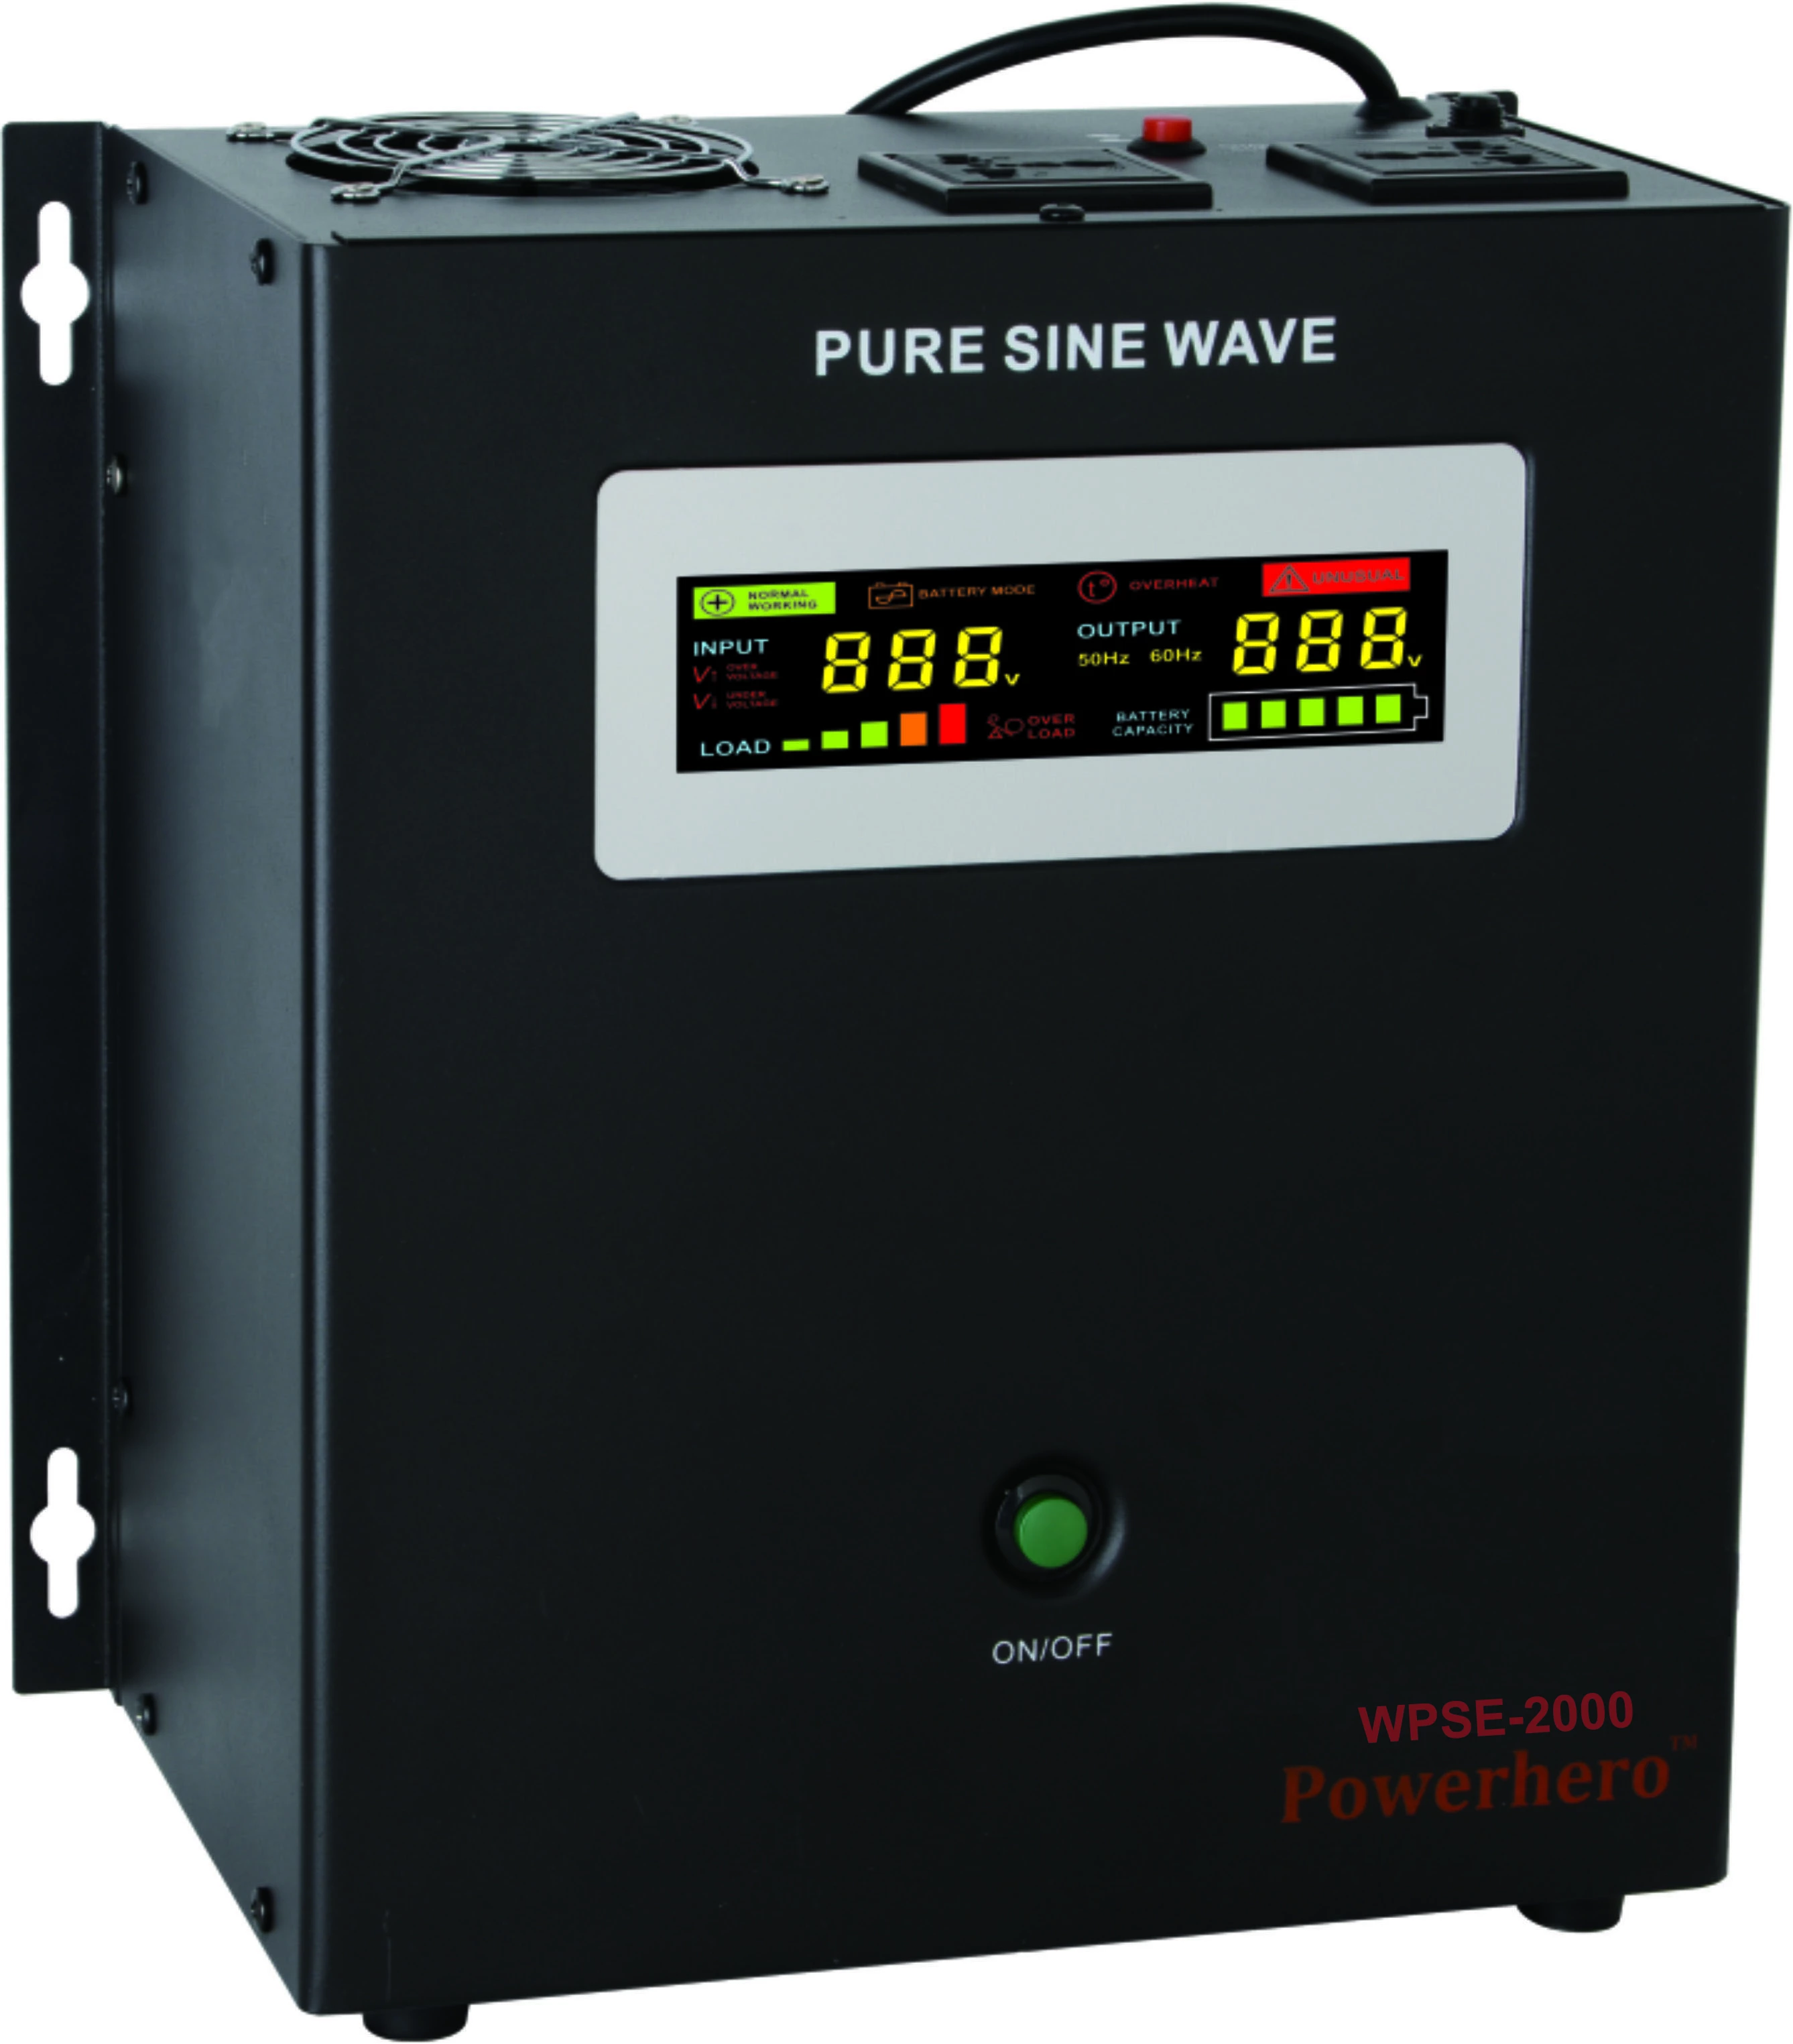 WPSE-2000 Wall type pure sine wave inverter 1